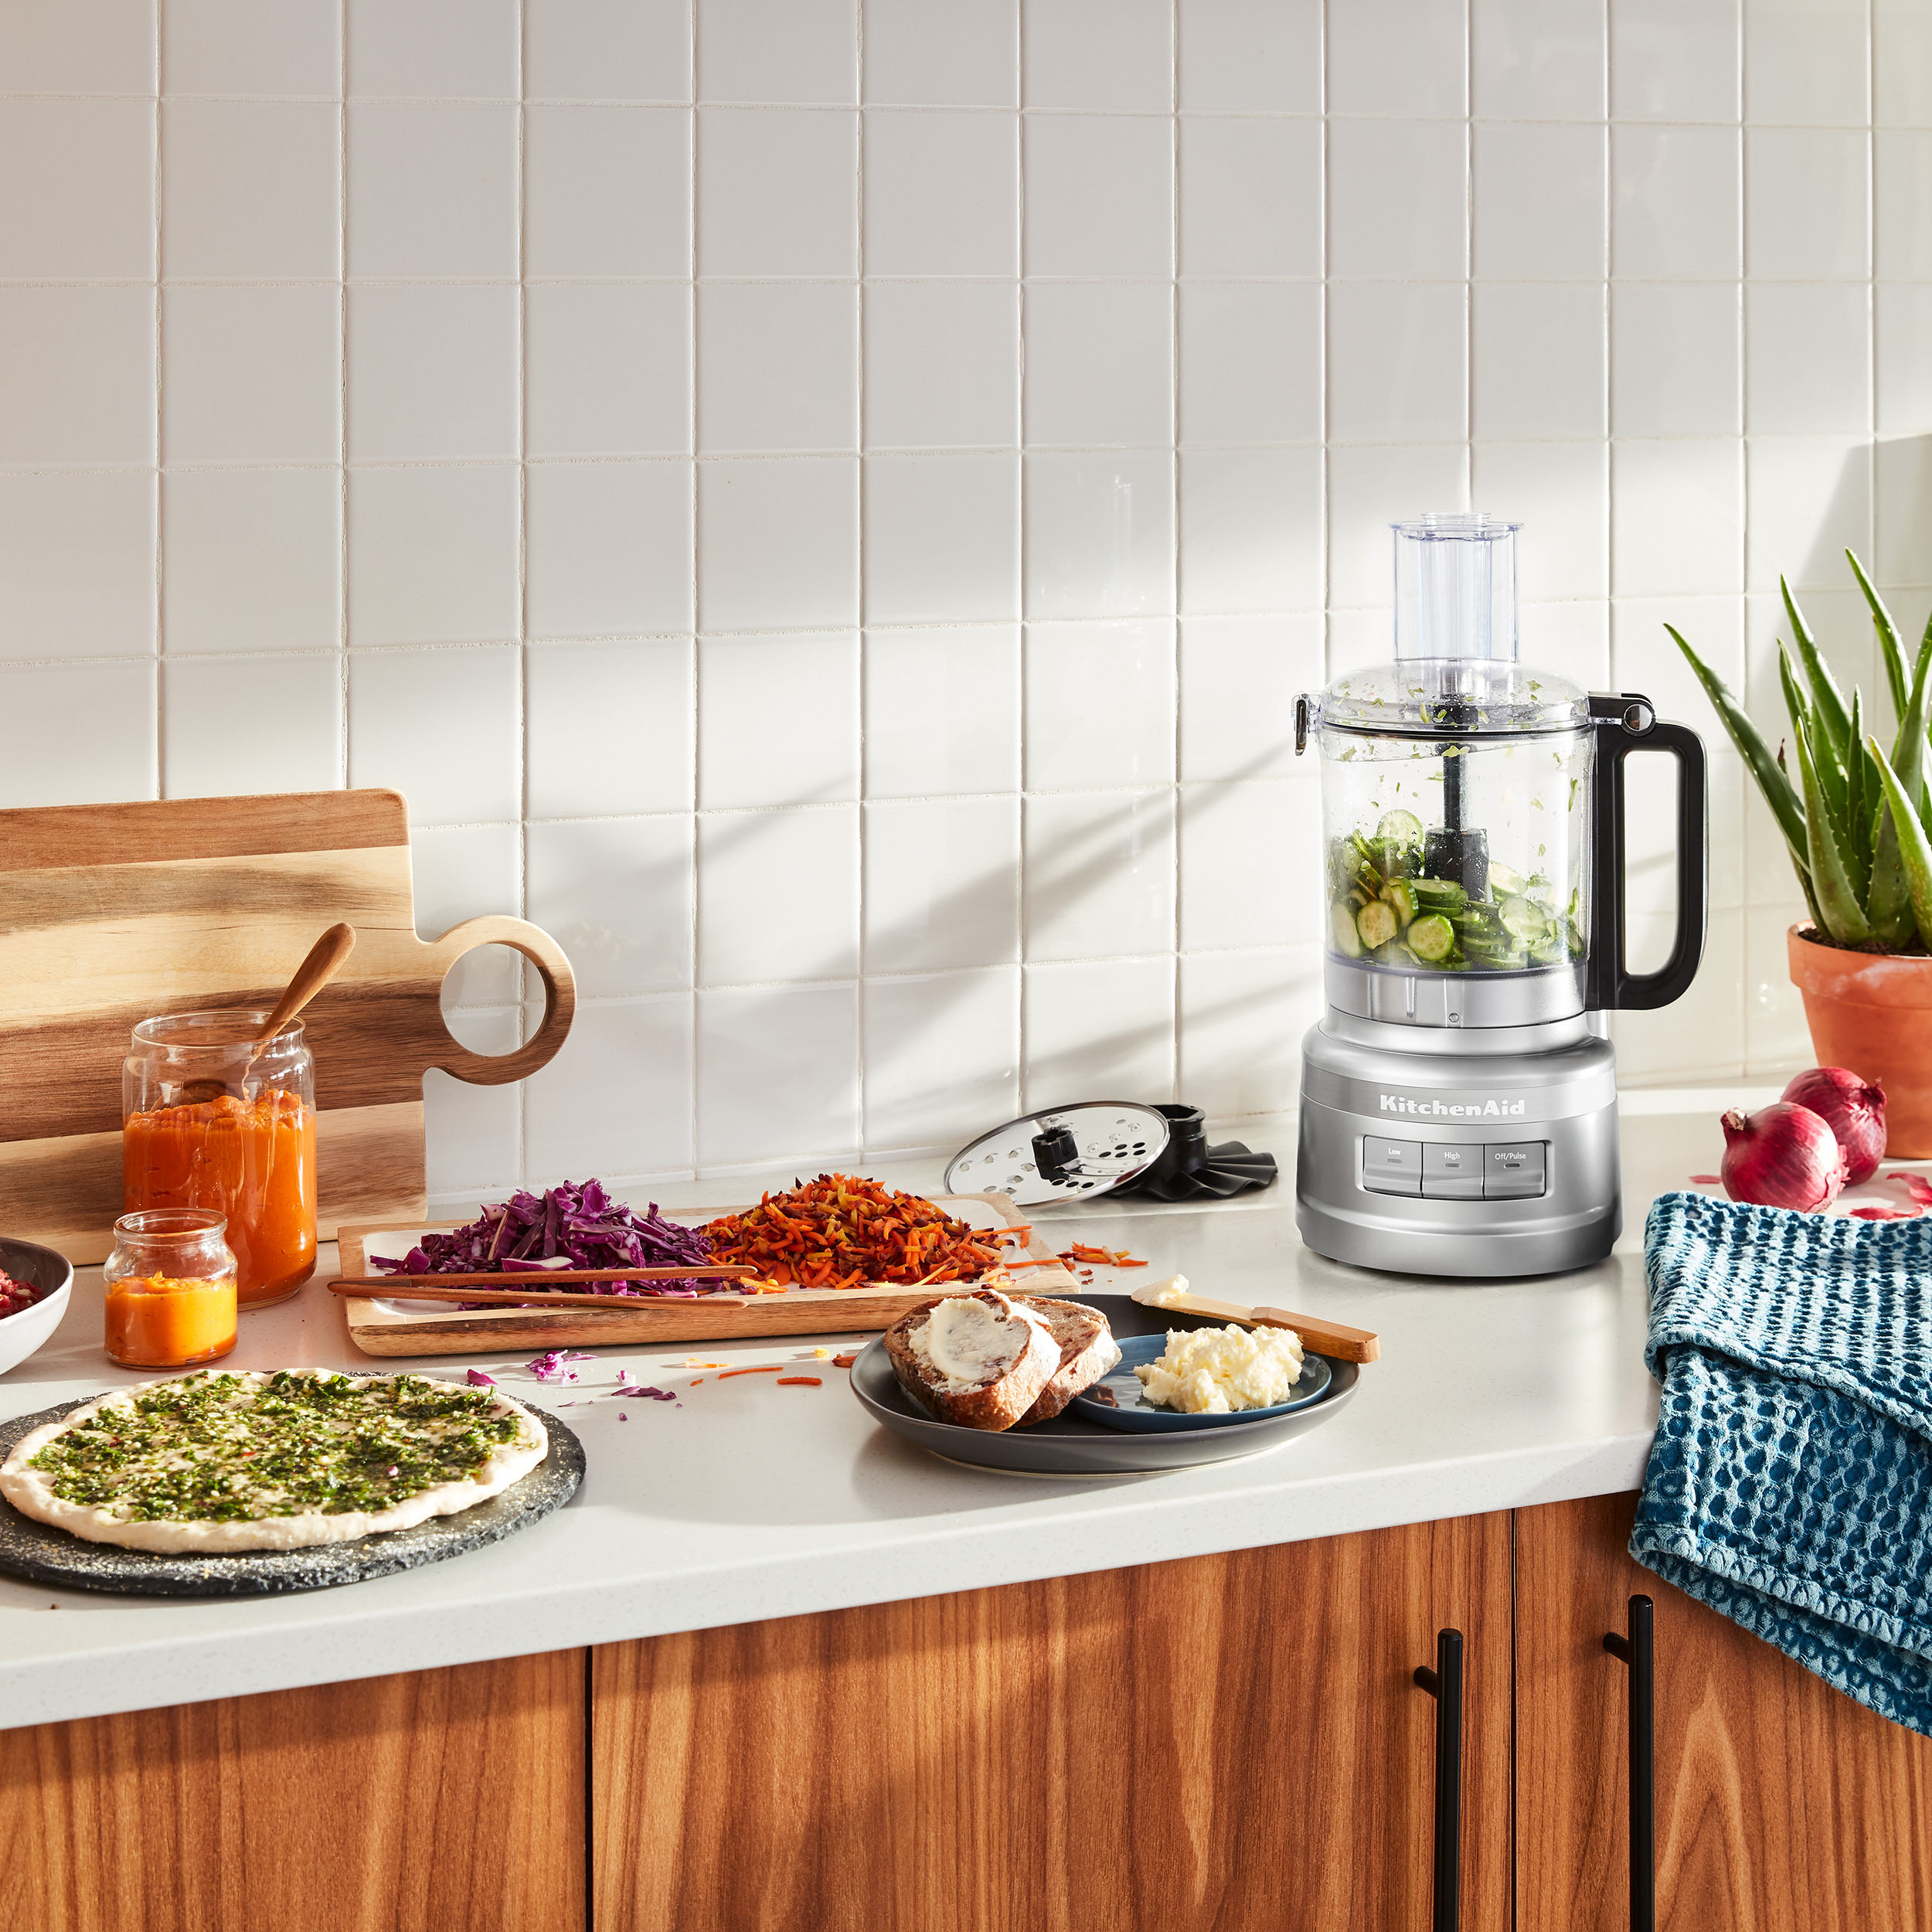 KitchenAid 13-Cup Food Processor just $99.99 {Reg. $199.99} at Best Buy